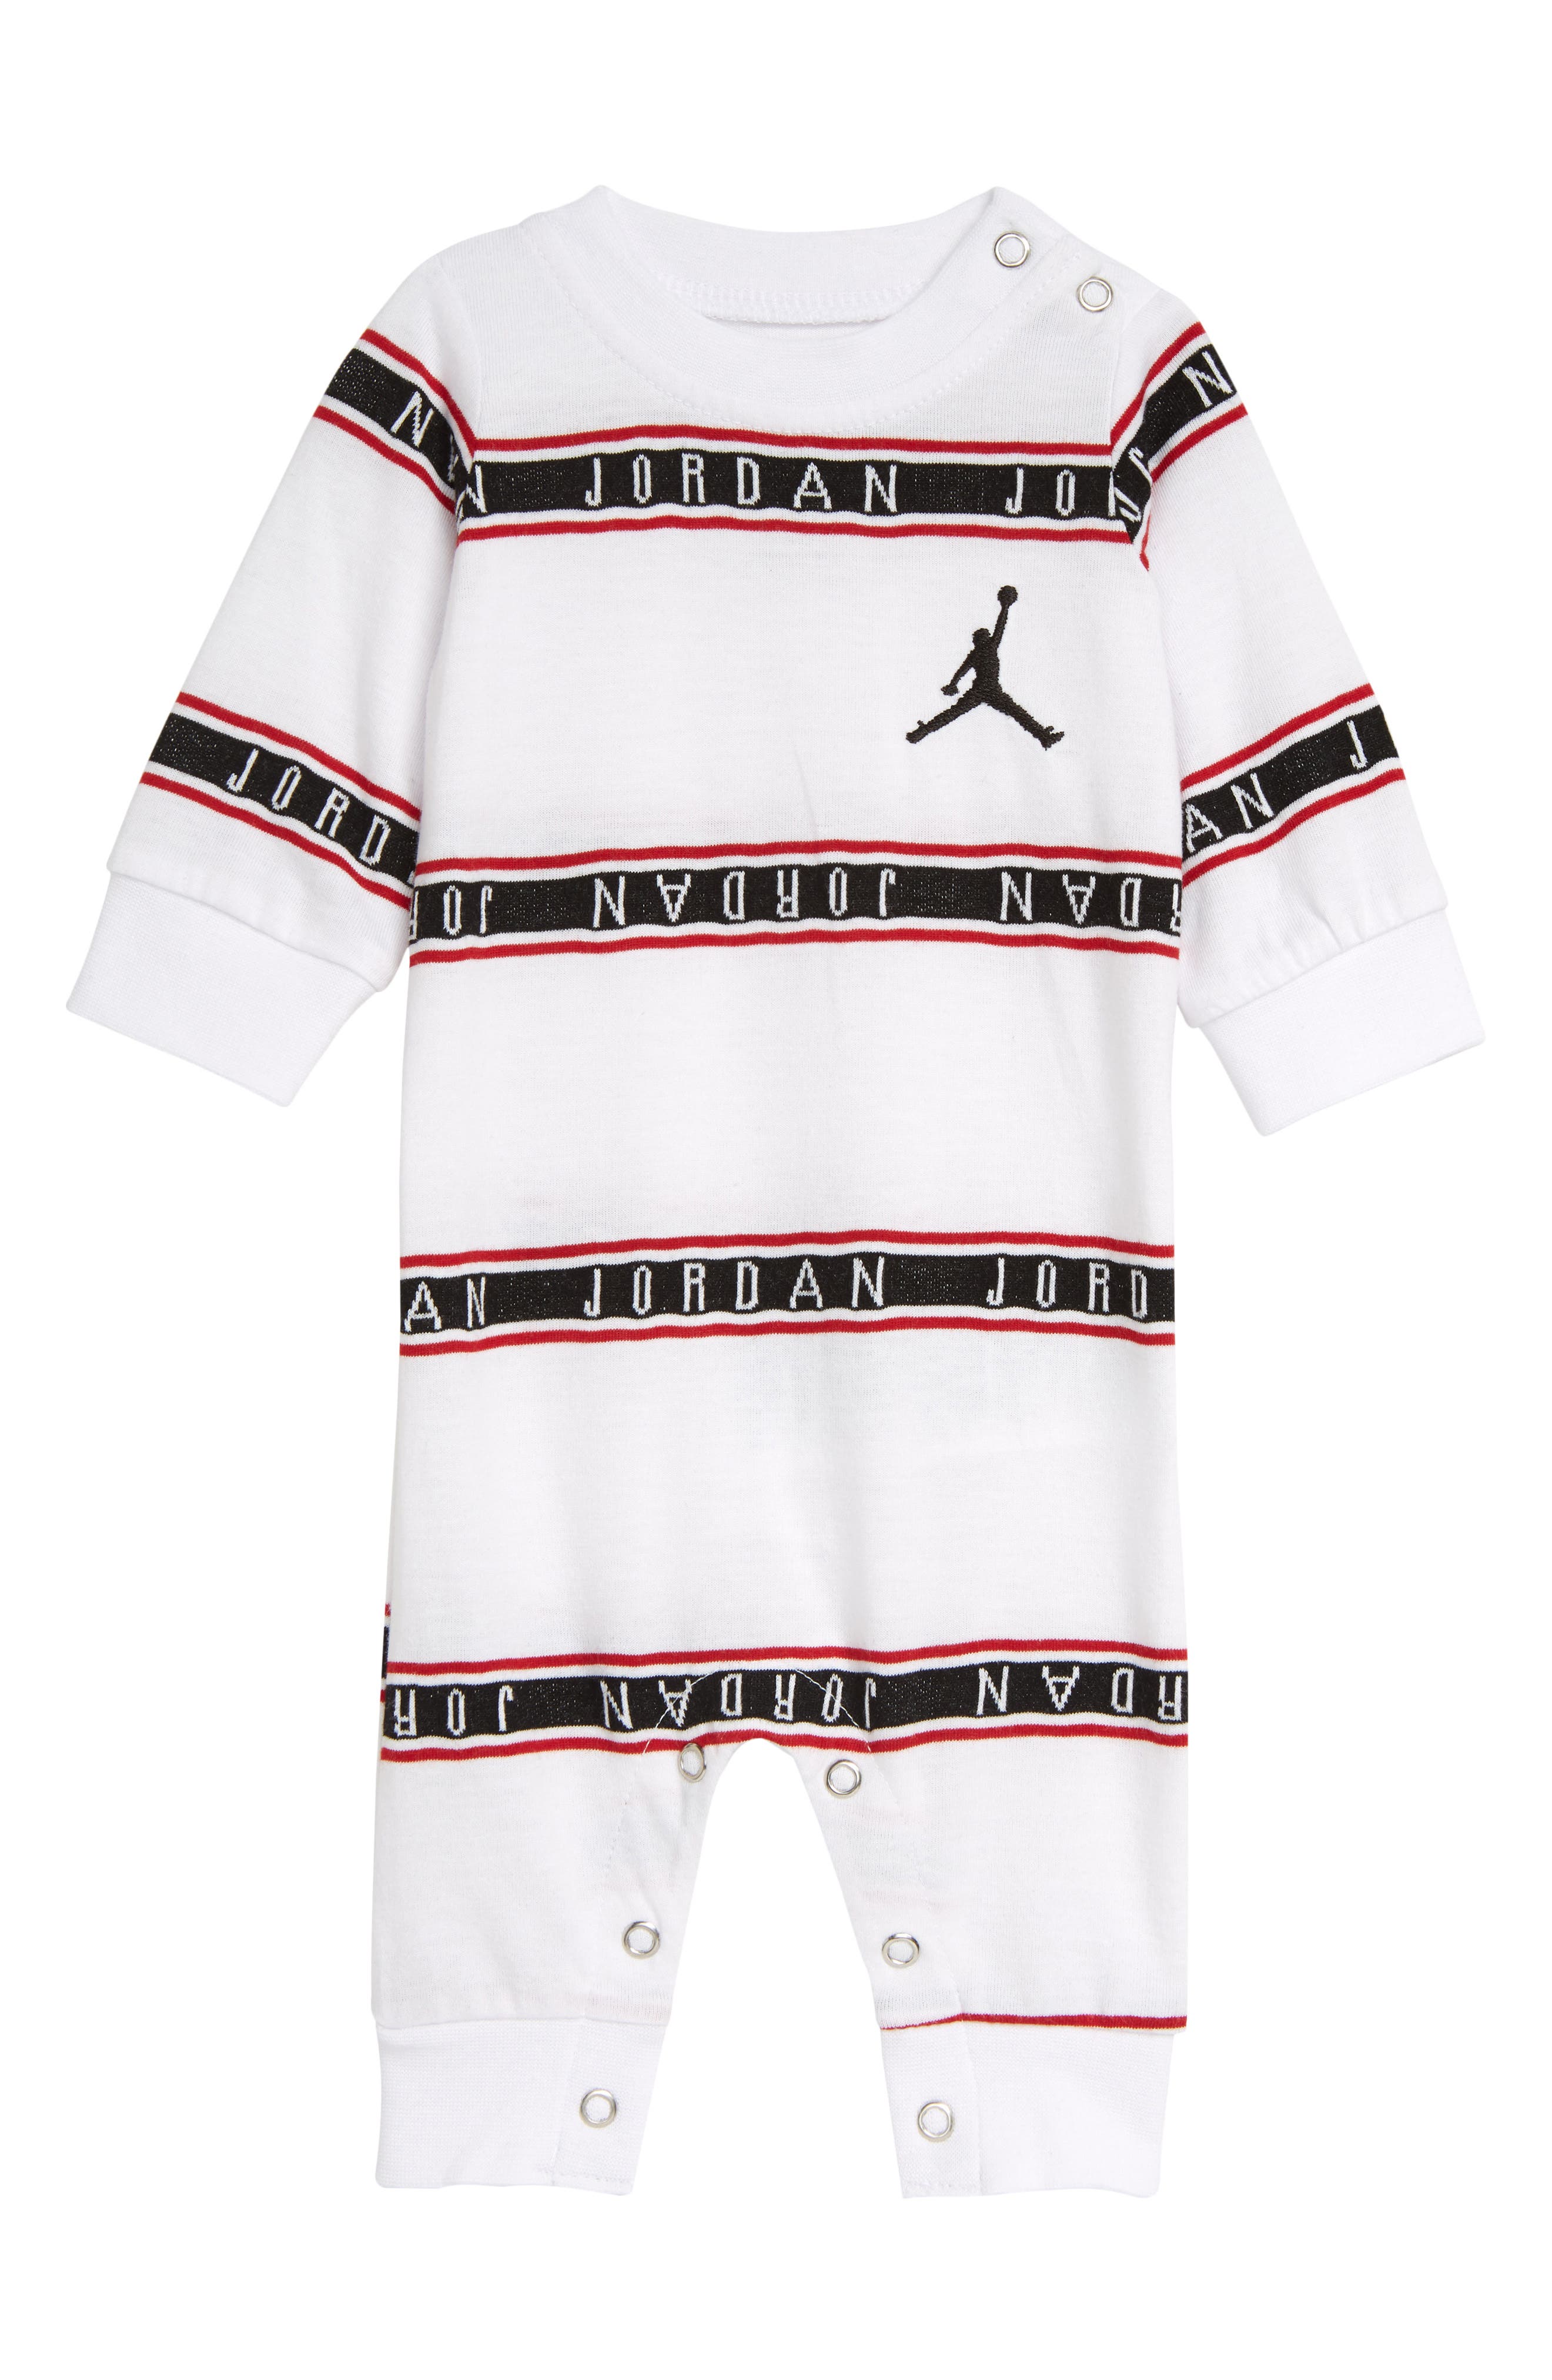 All Baby Boy Jordan Clothes | Nordstrom